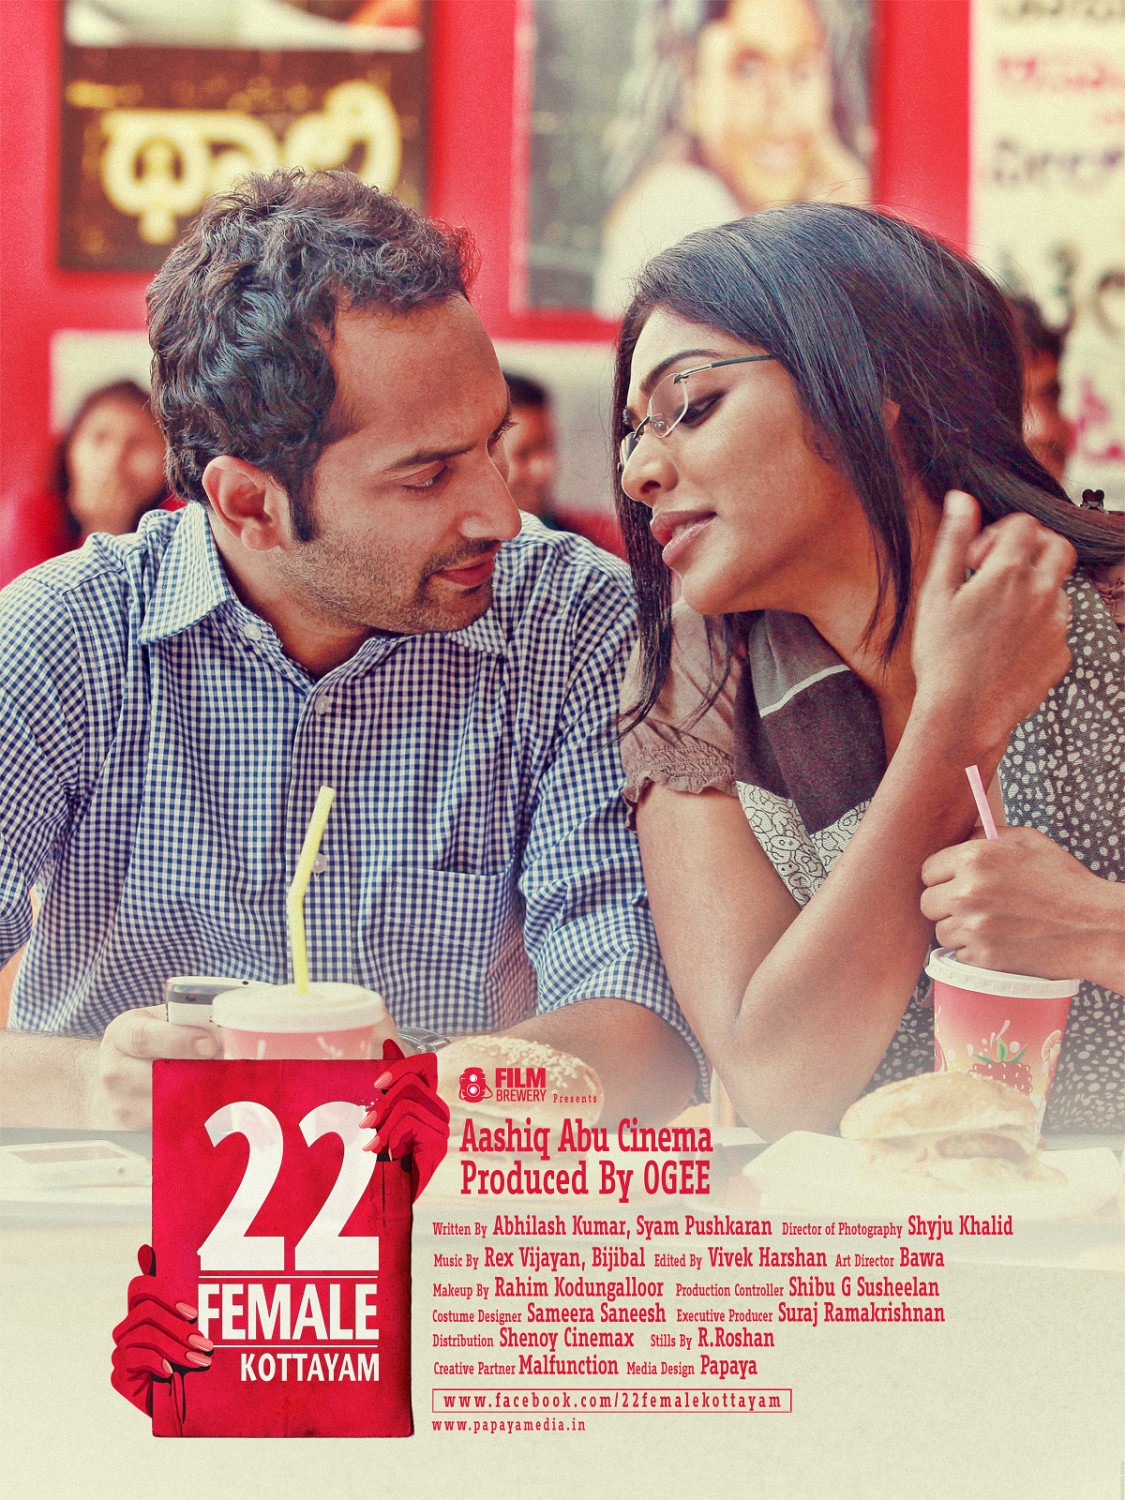 Extra Large Movie Poster Image for 22 Female Kottayam (#3 of 28)